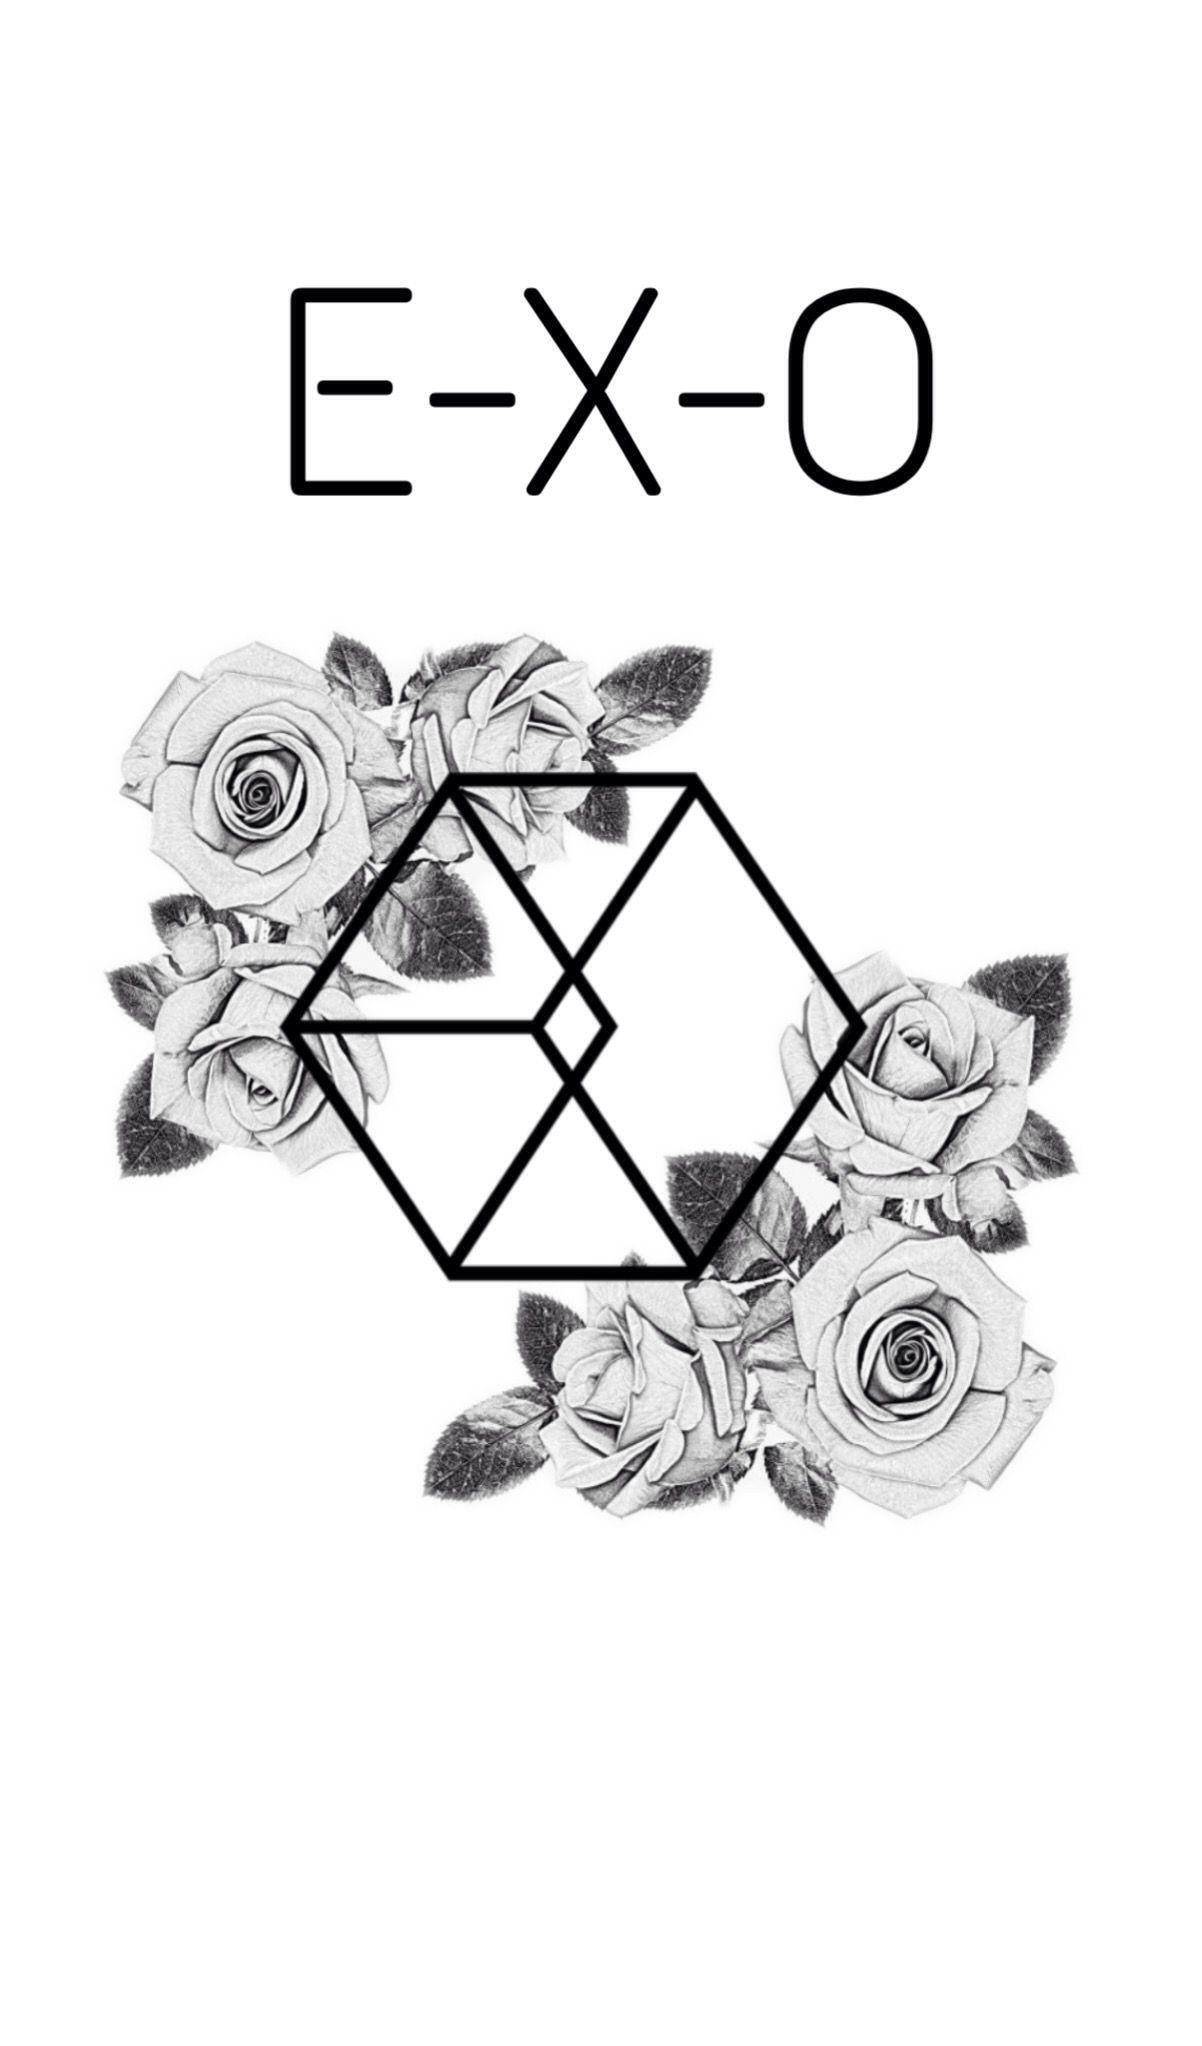 exo wallpaper☜ ☞ - BlackPearlLuver Wallpaper (37711022) - Fanpop